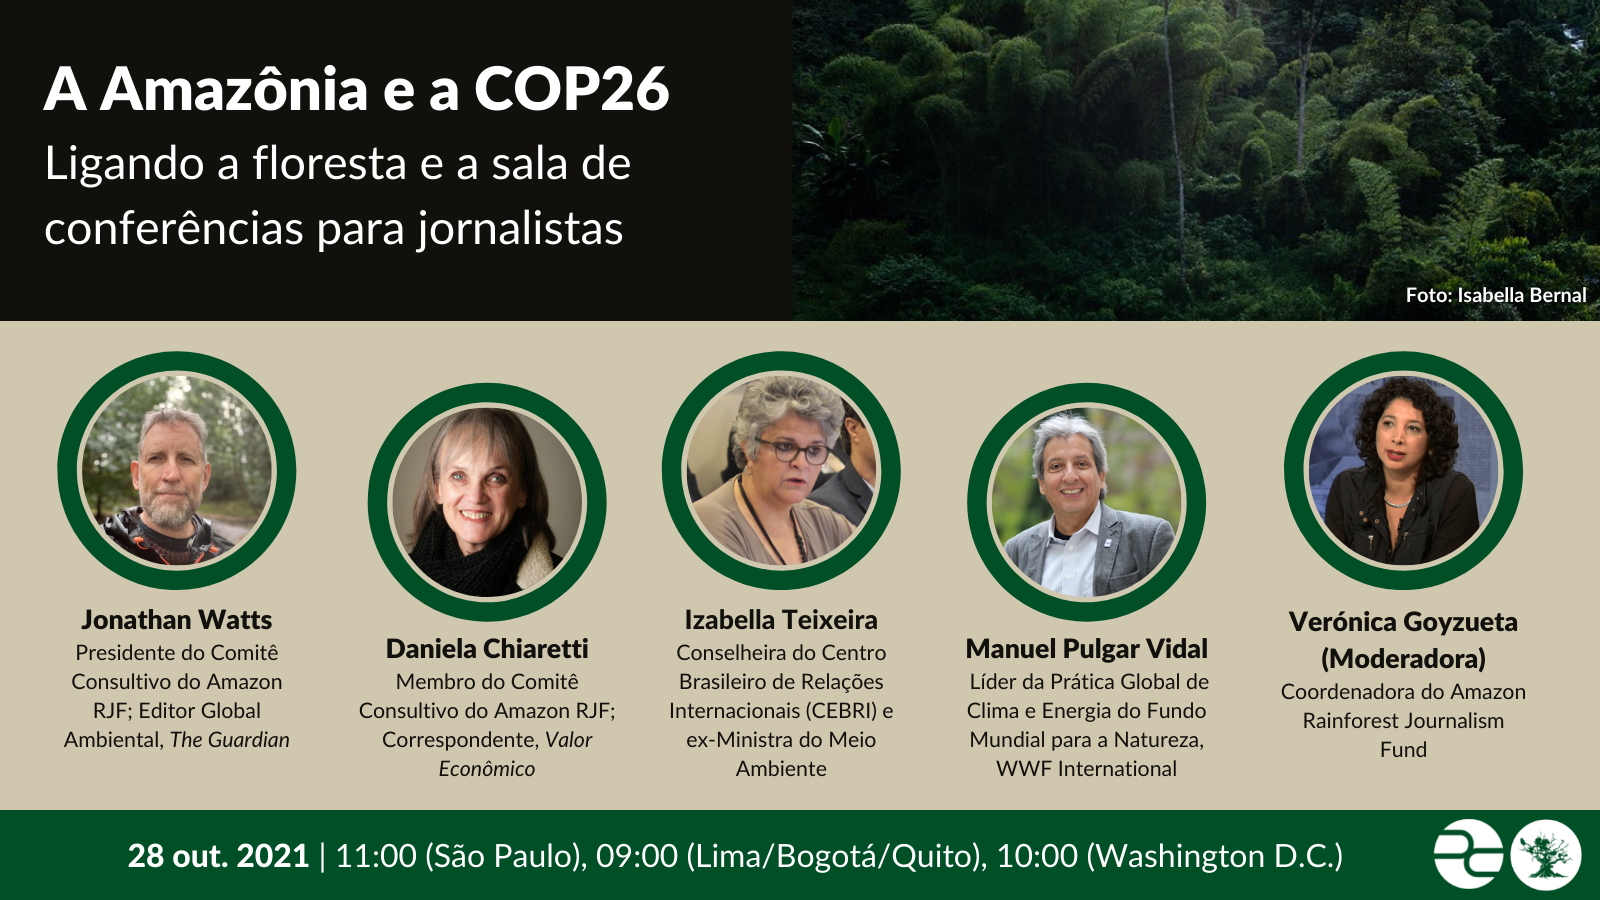 The Amazon and COP26 Portuguese